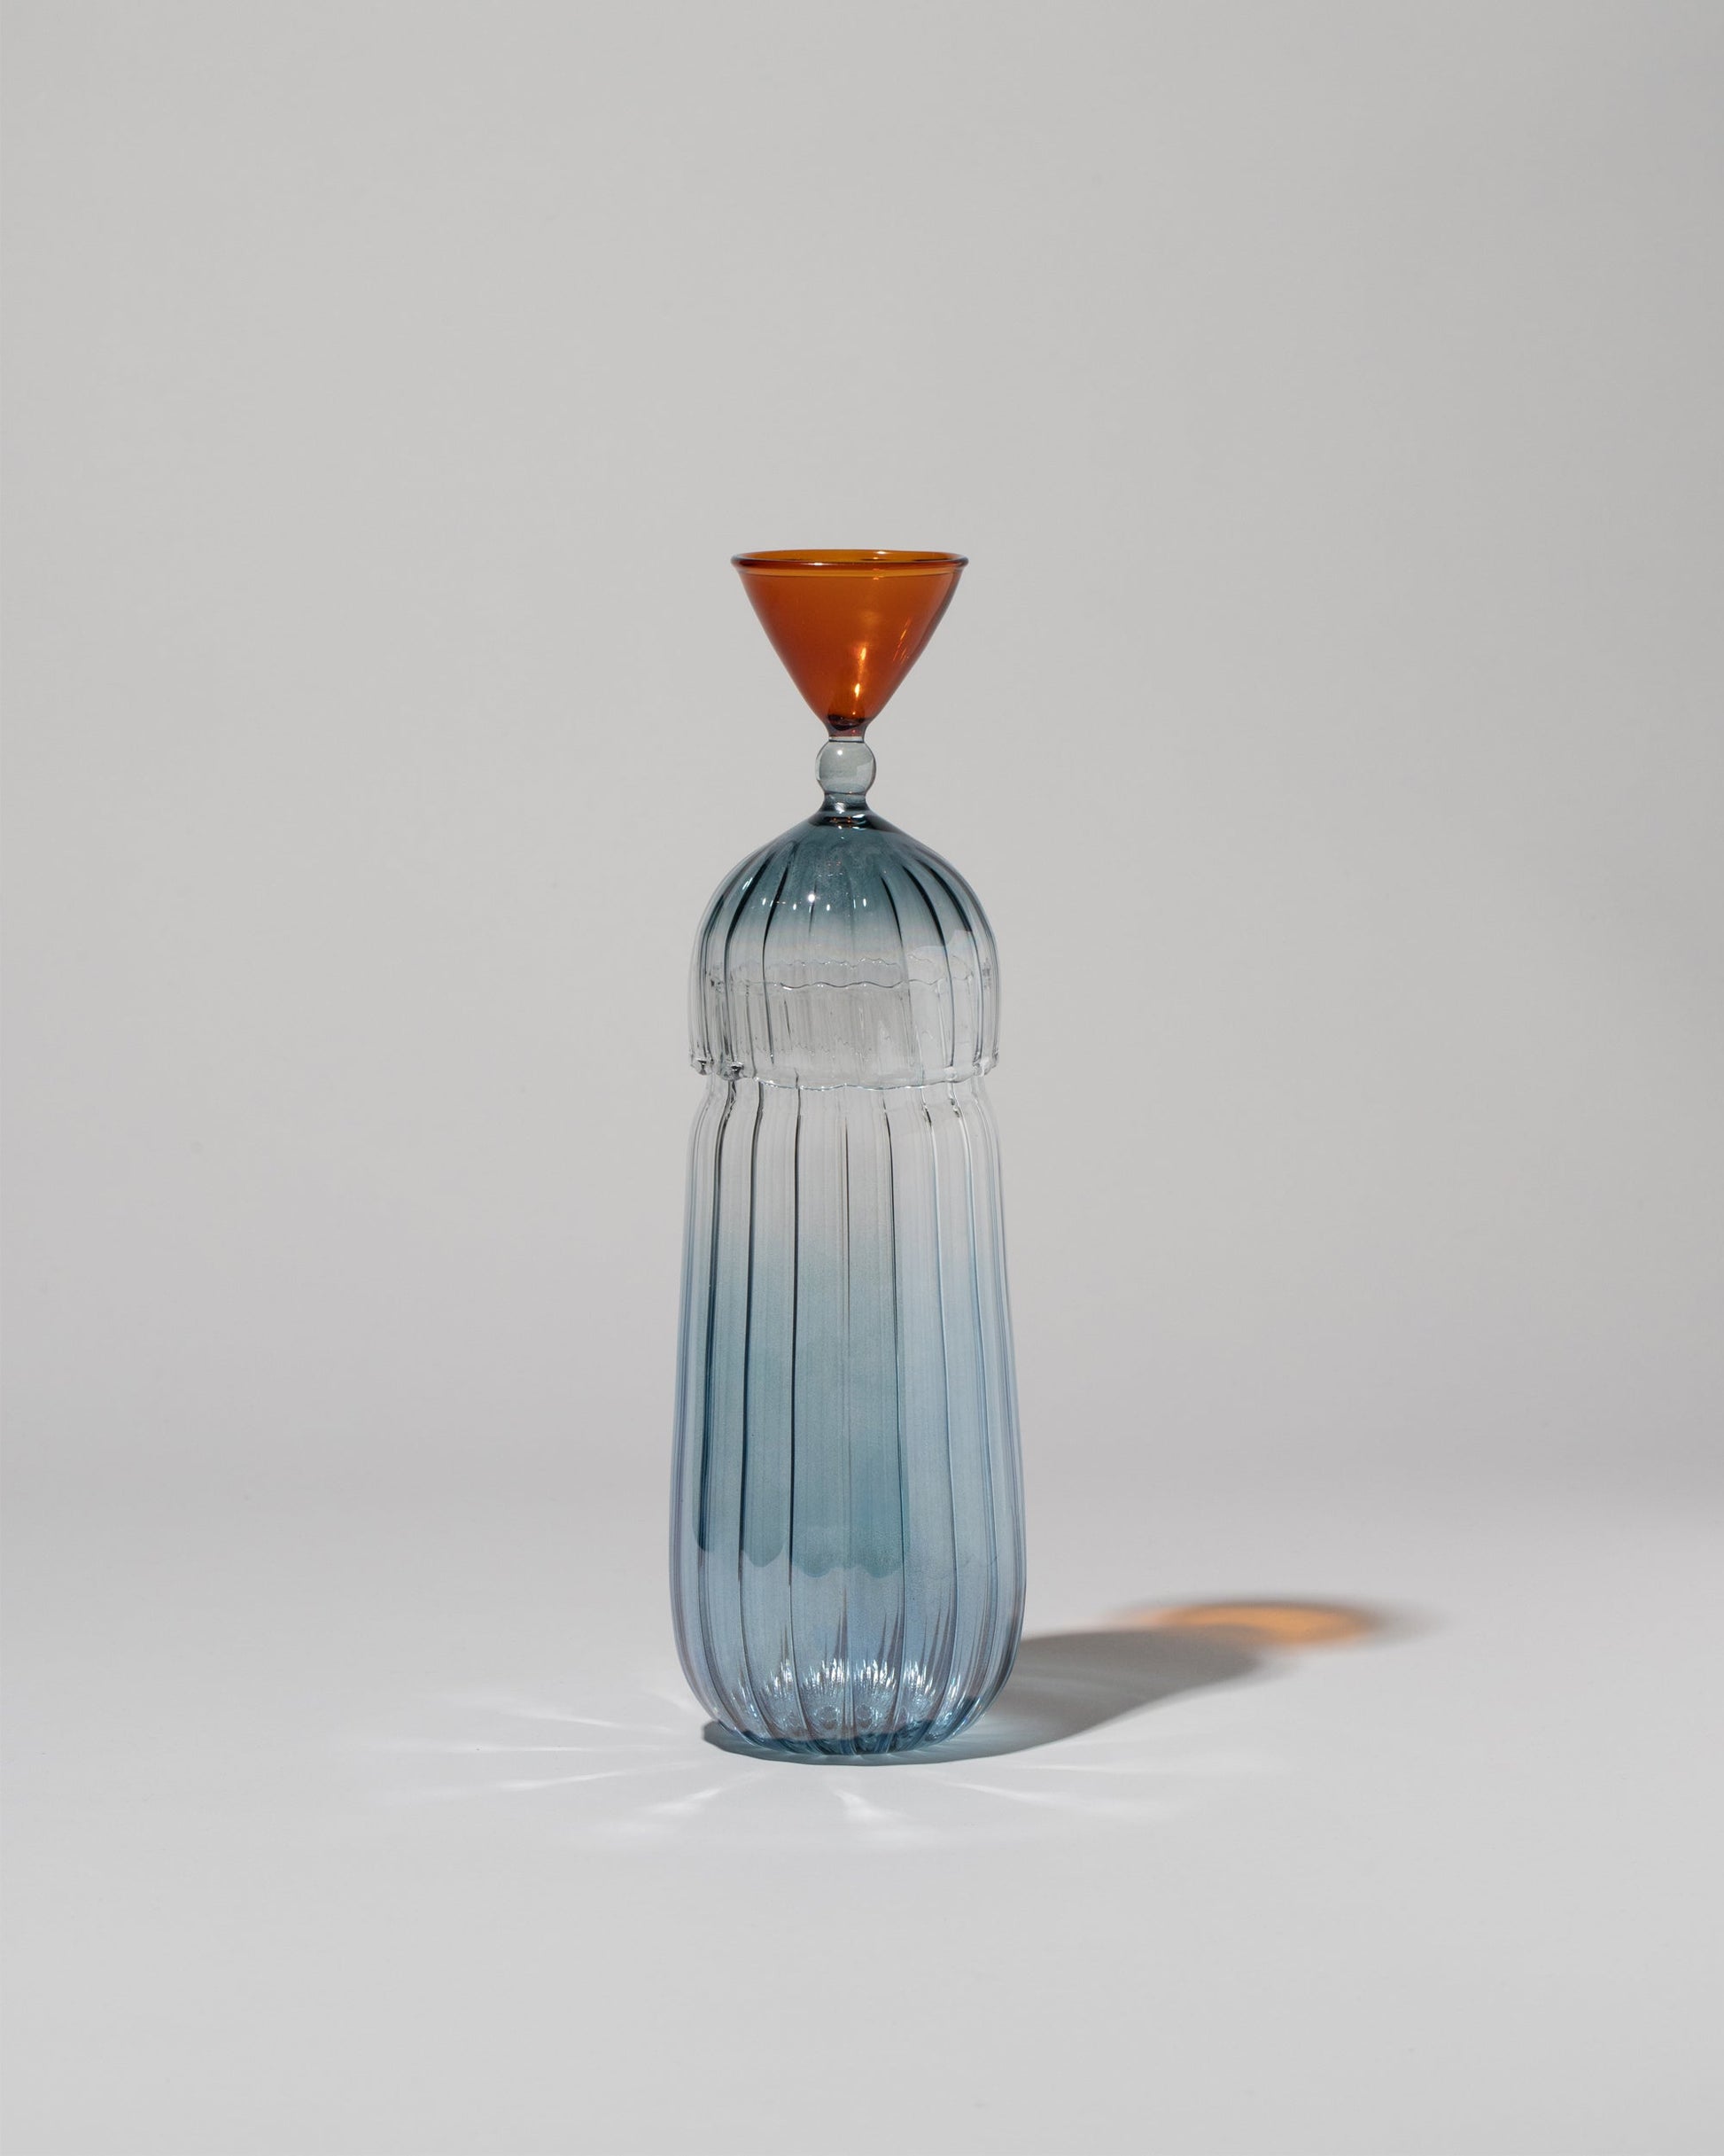  Serena Confalonieri Calypso Bottle & Glass on light color background.